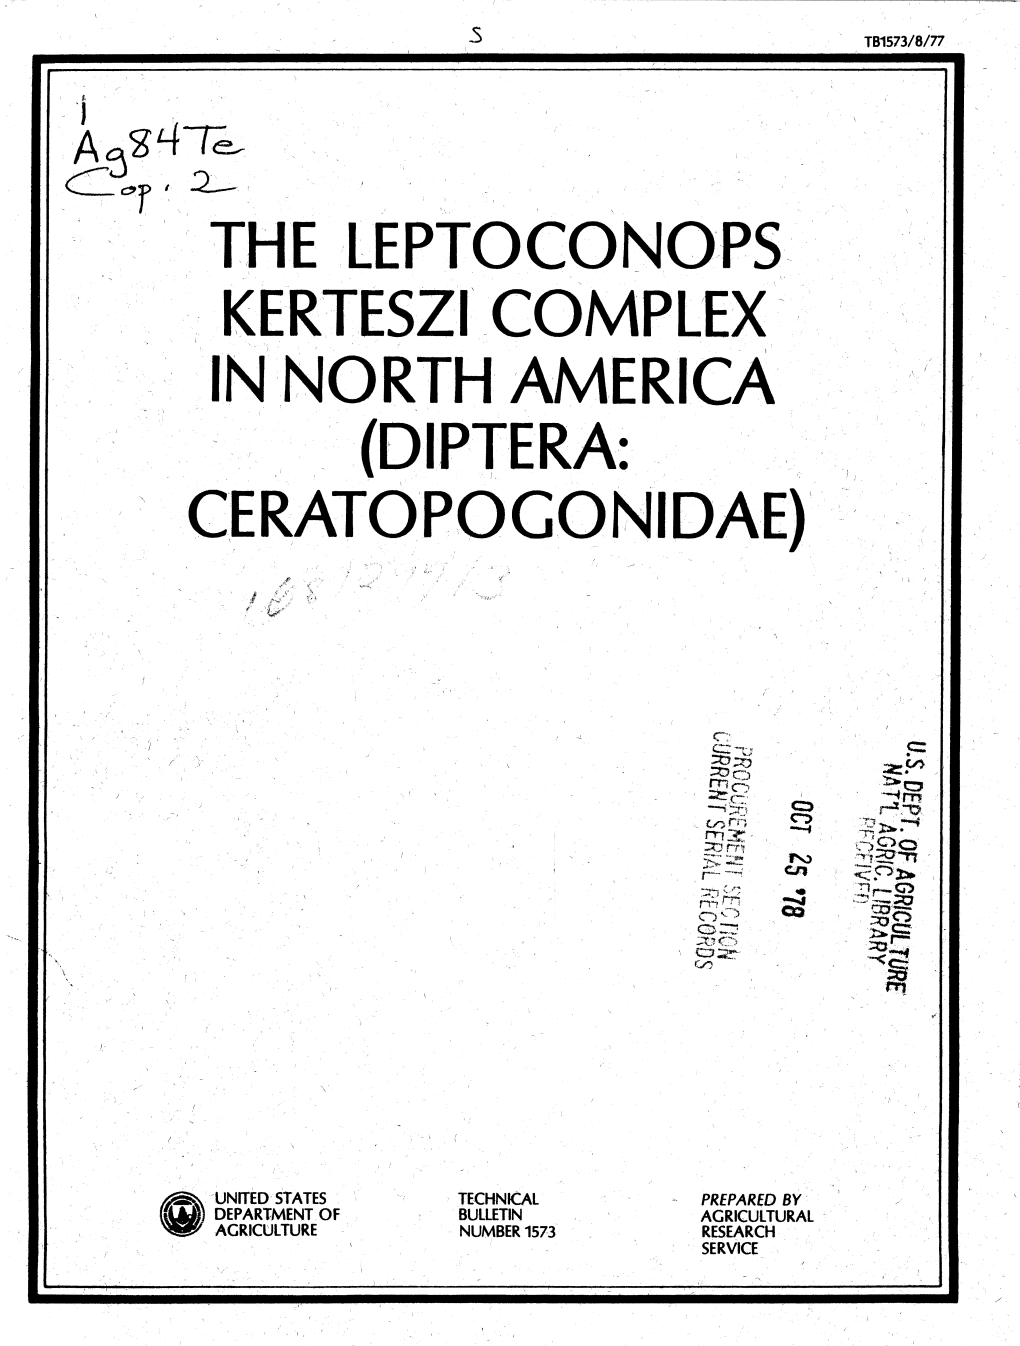 The Leptoconops Kerteszi Complex in North America (Díptera: Ceratopogonidae)